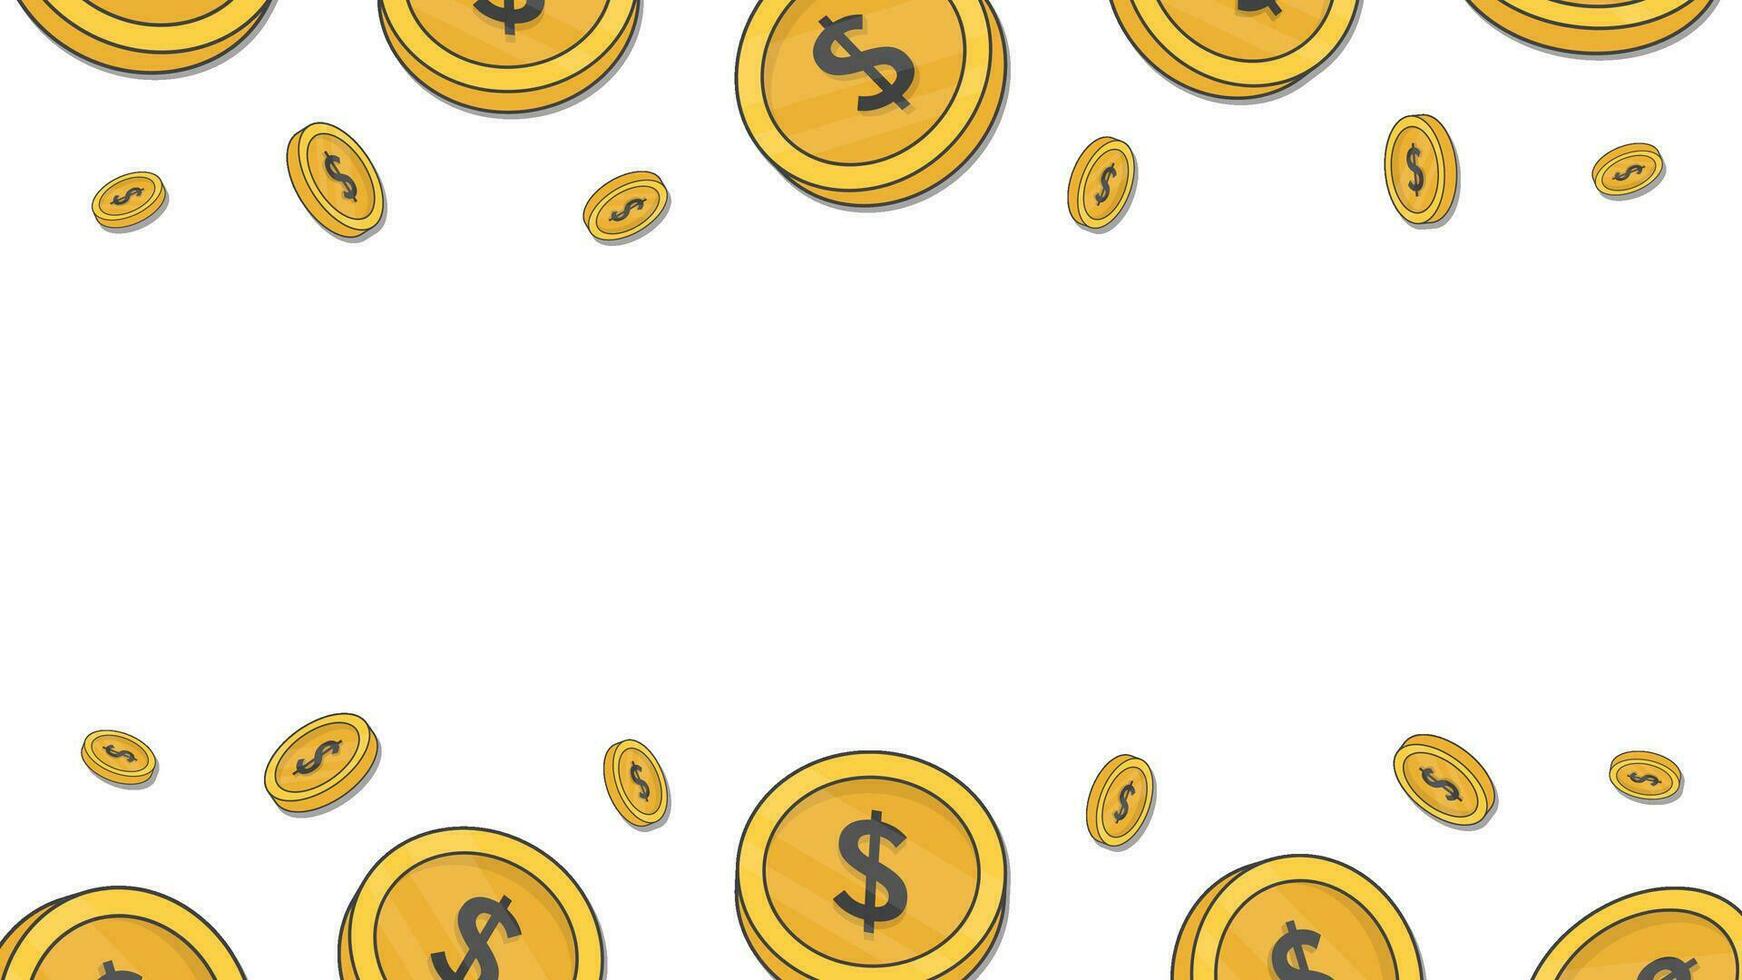 Money Background Design Template. Gold Coins Cartoon Vector Illustration. Dollar